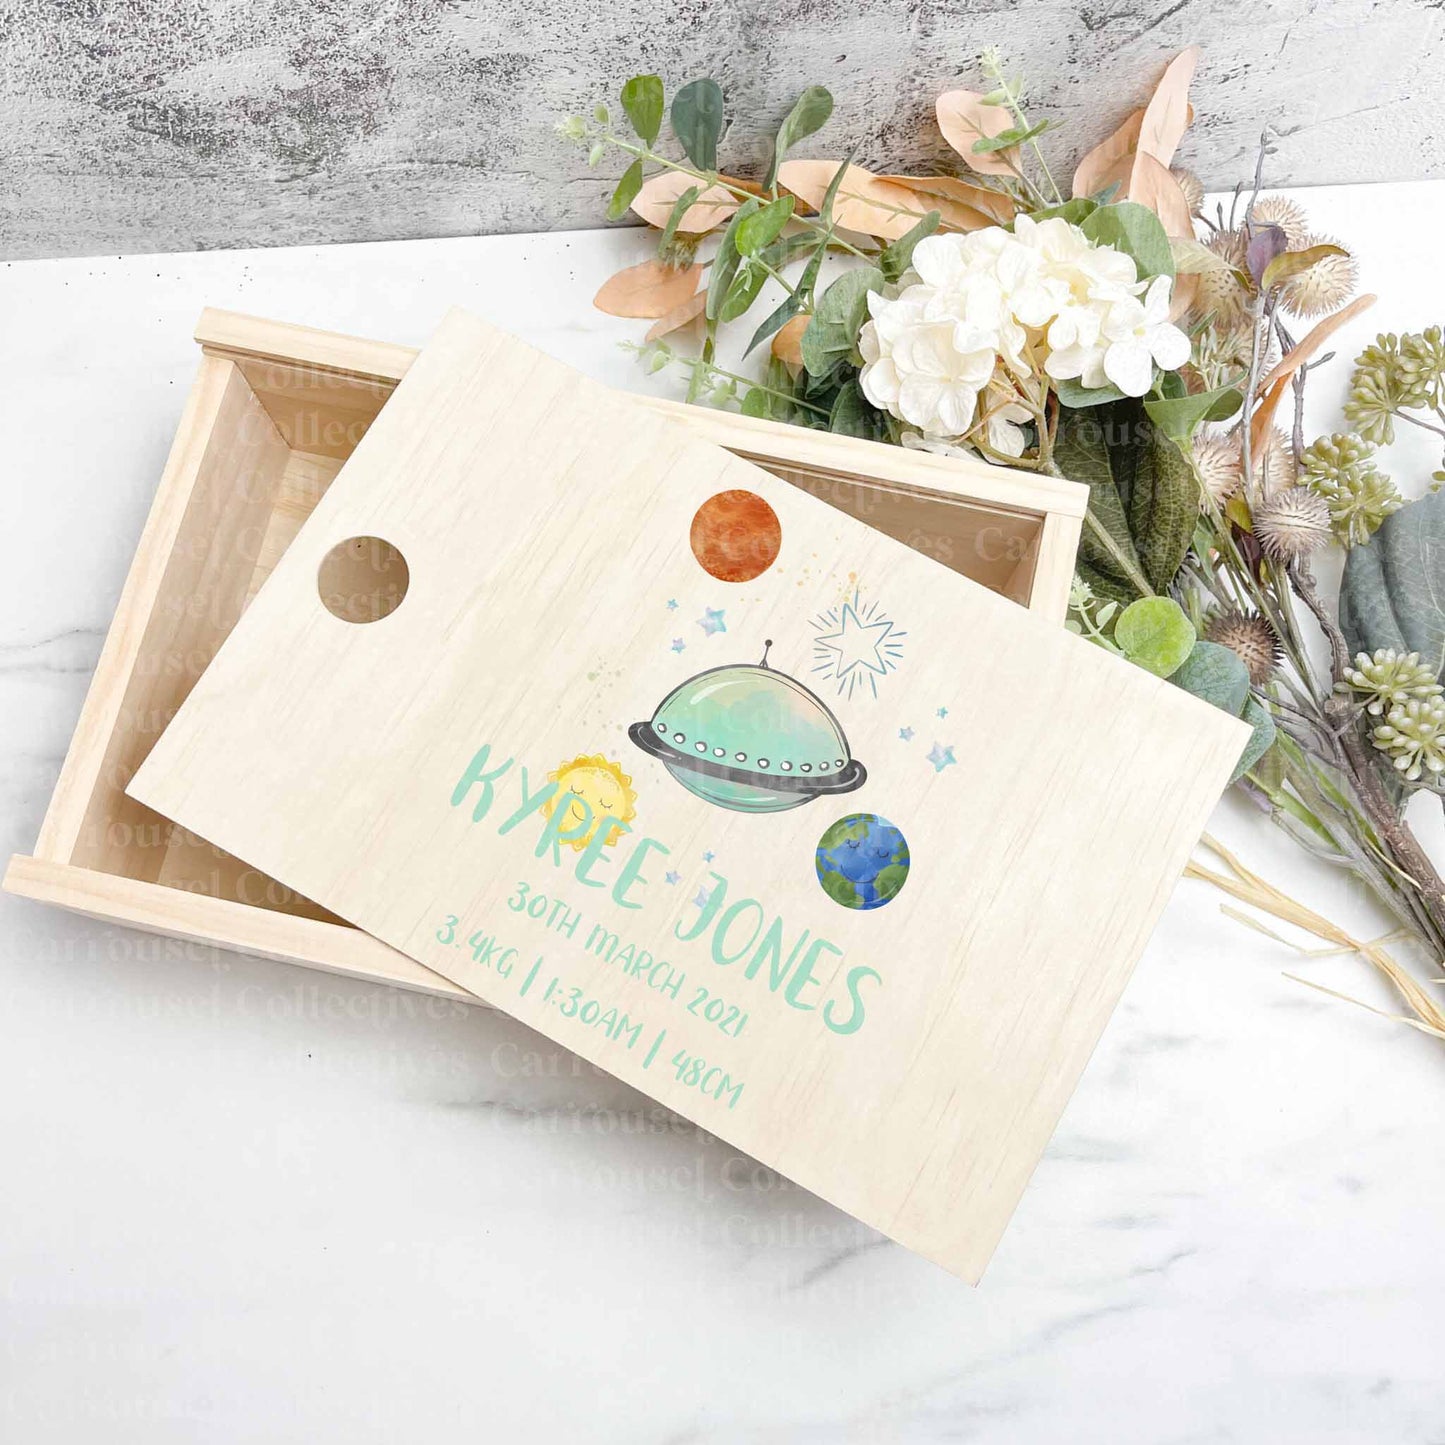 Space themed baby keepsake boxes - Memories box